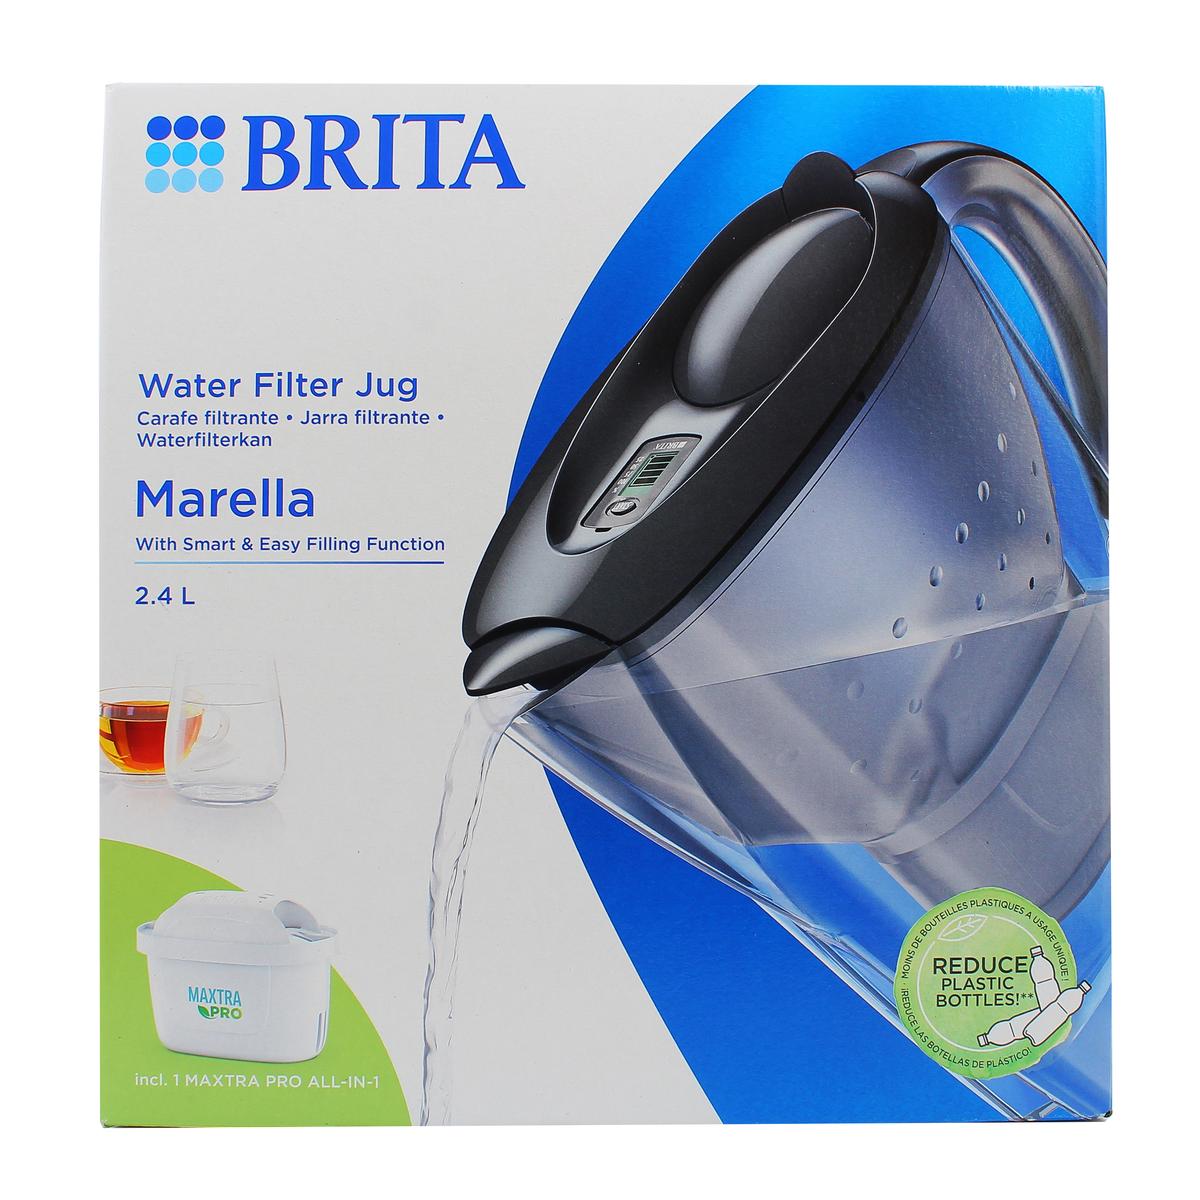 Livraison à domicile BRITA Carafe Filtrante Marella XL Bleu, 3,5L